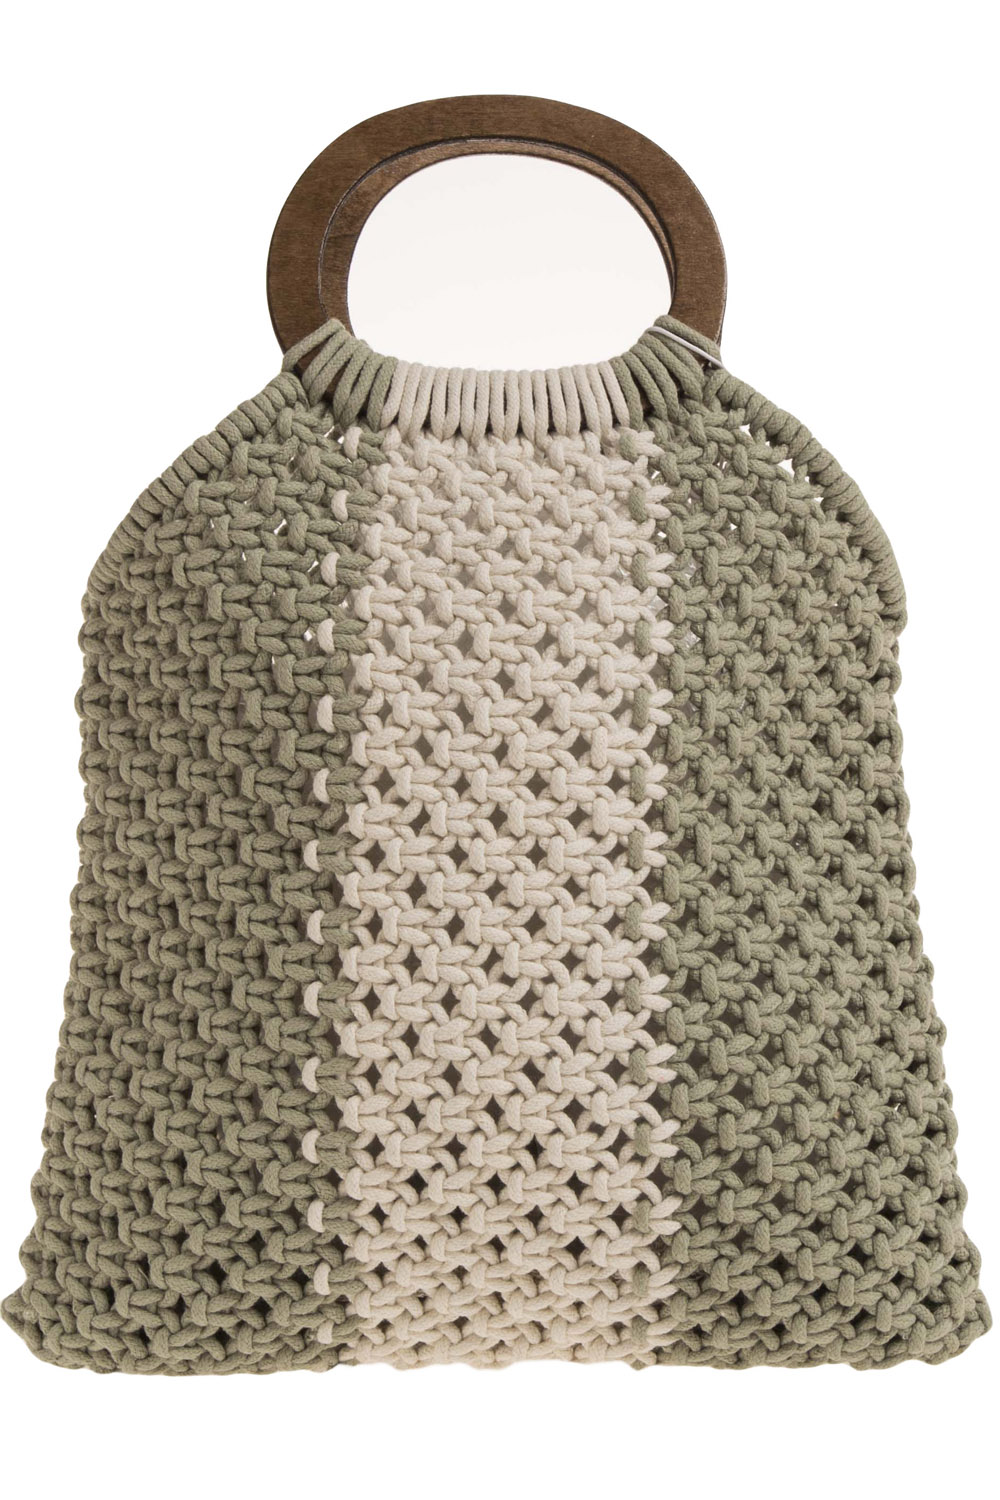 Cotton Crochet Handbag with Wooden Handle